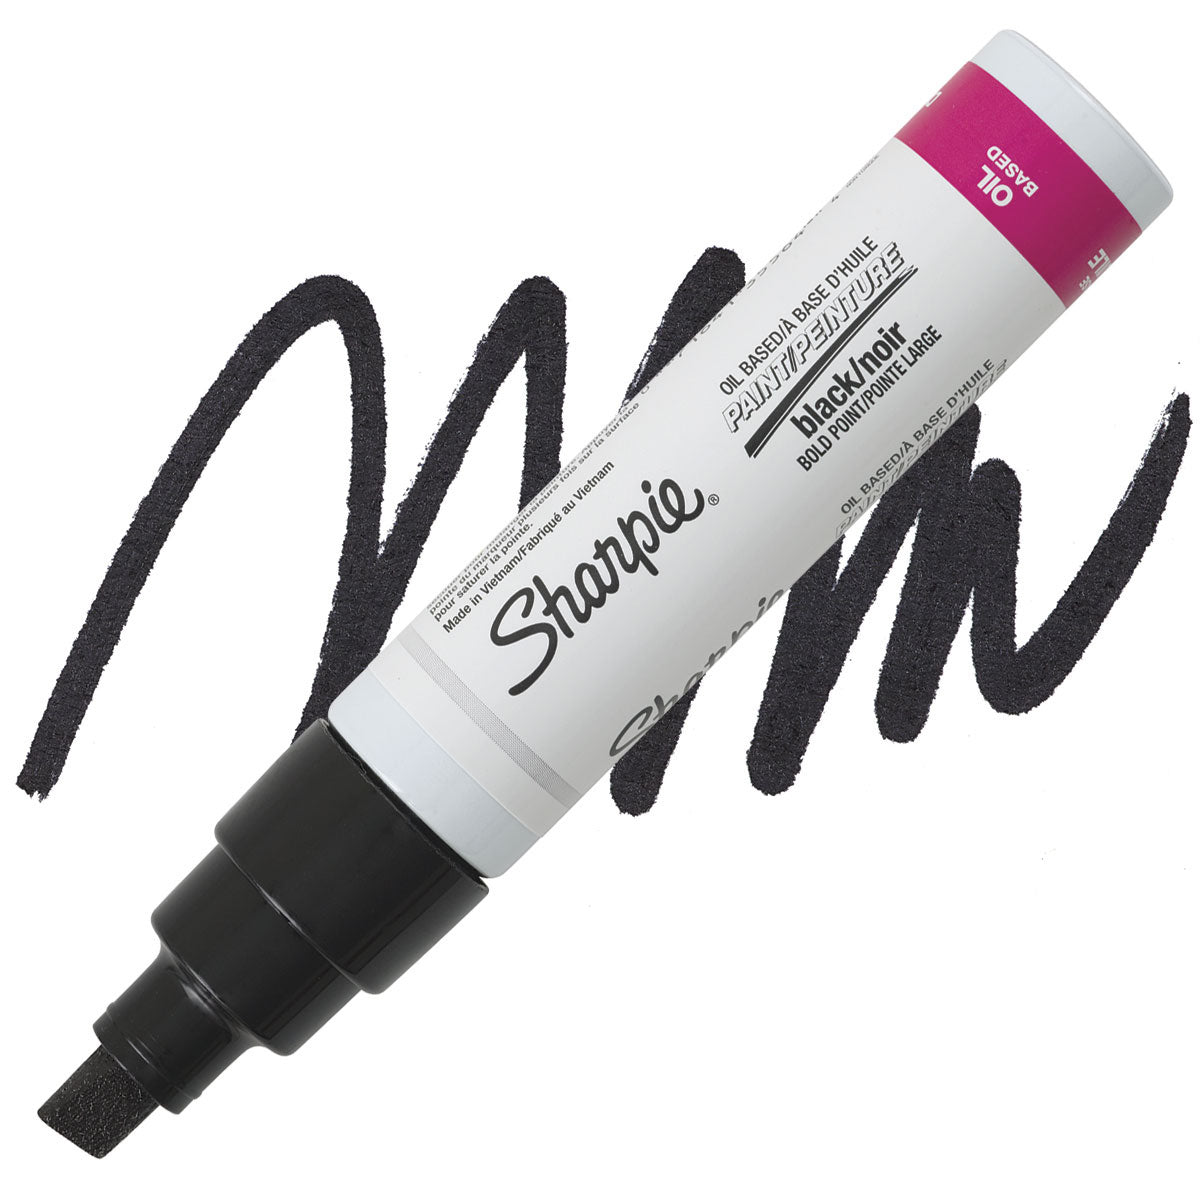 Sharpie Oil-based Bold Black Paint Pen/Marker at